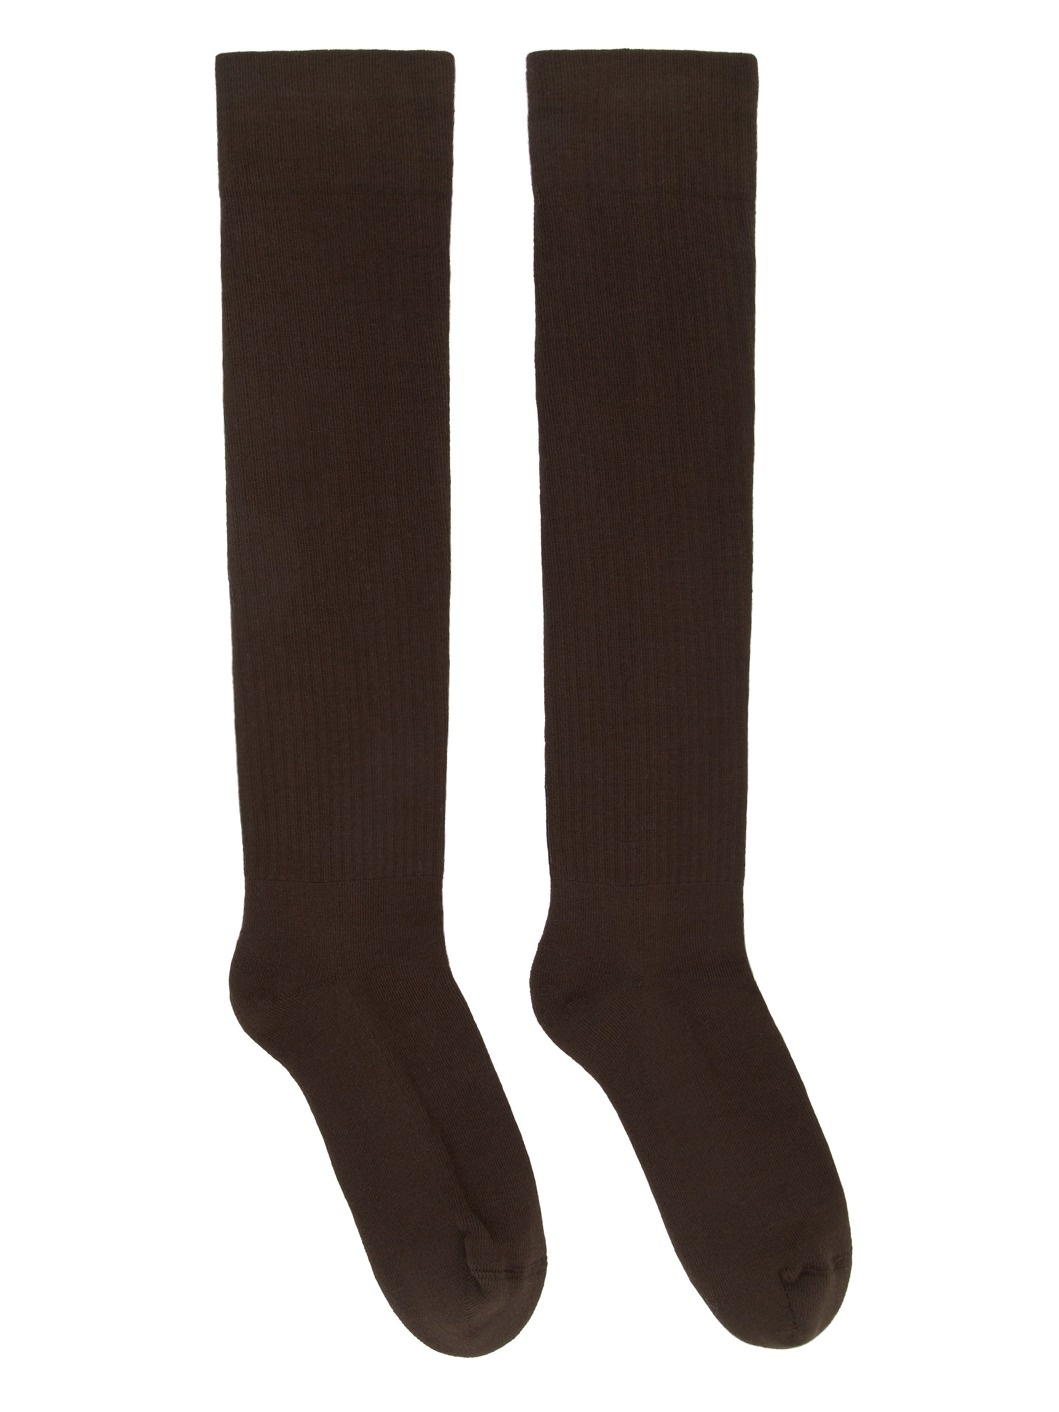 Brown Cotton Knee-High Socks - 1